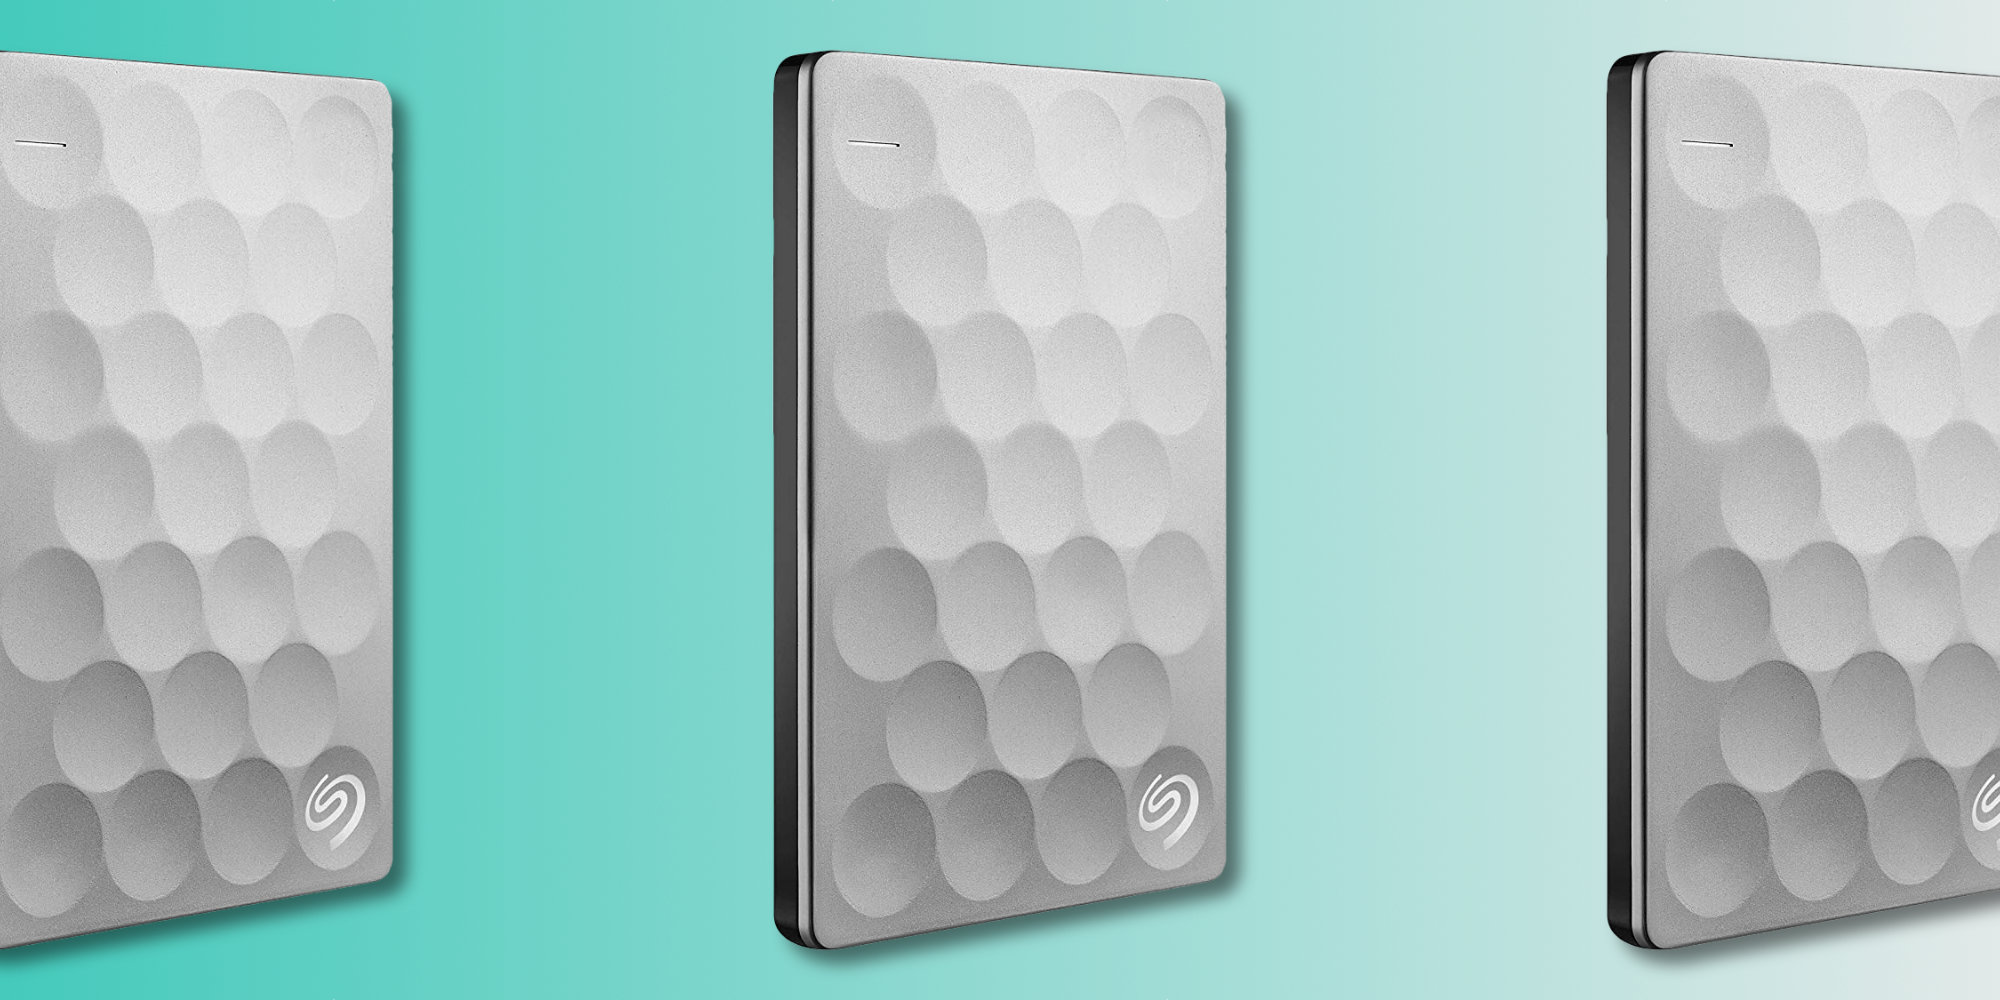 walmart seagate - backup plus slim for mac 1tb external usb 3.0 portable hard drive - silver/black